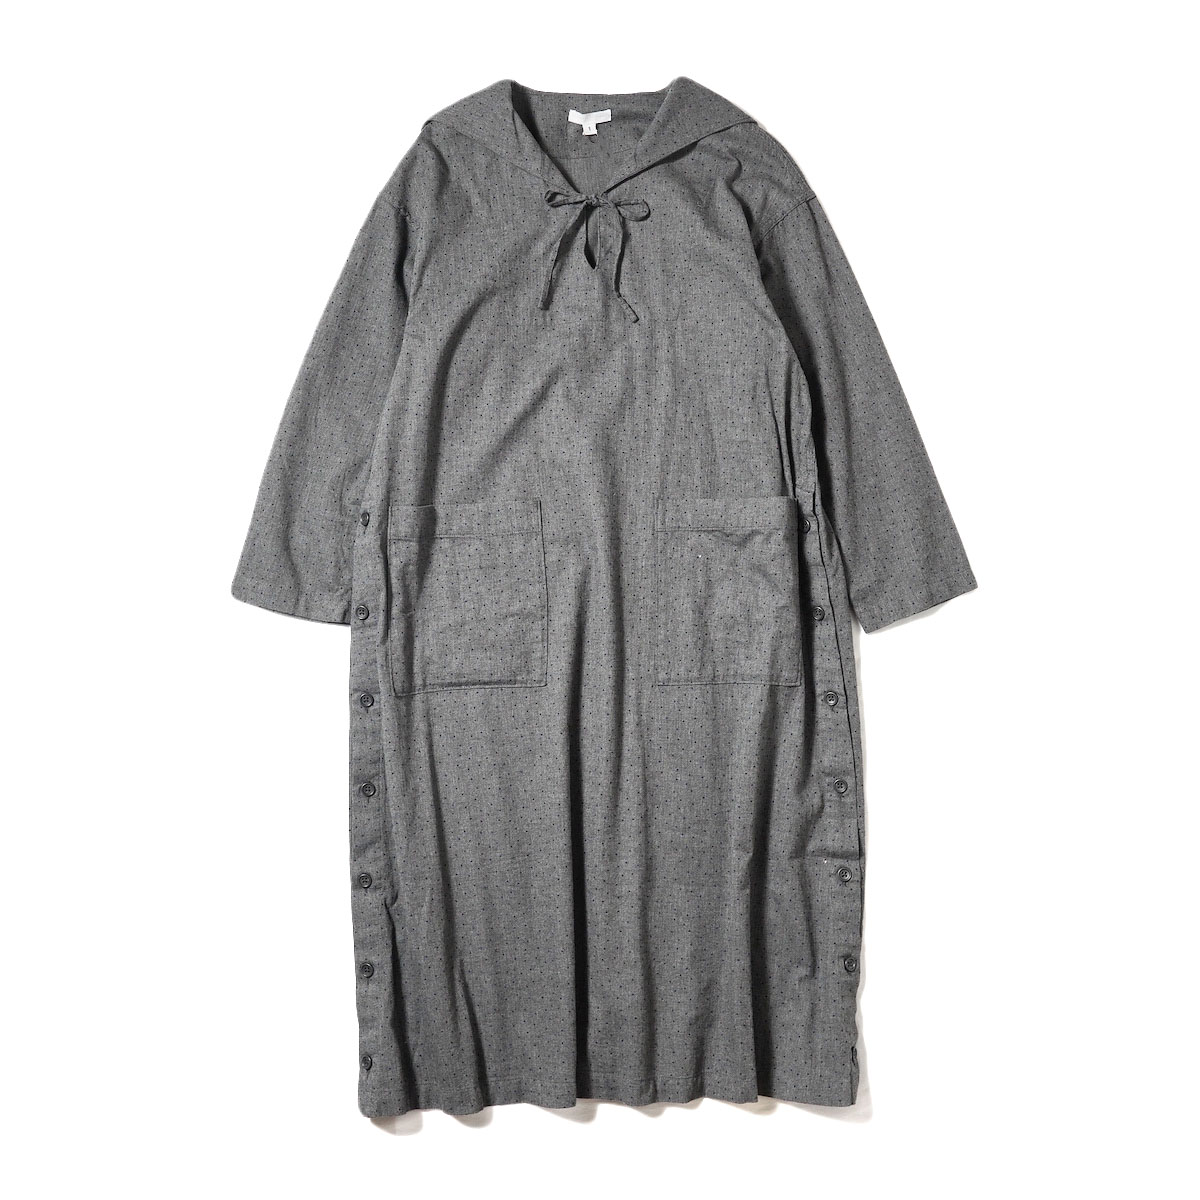 Engineered Garments / Sailor Dress (Grey with Navy Polka Dot Flannel)